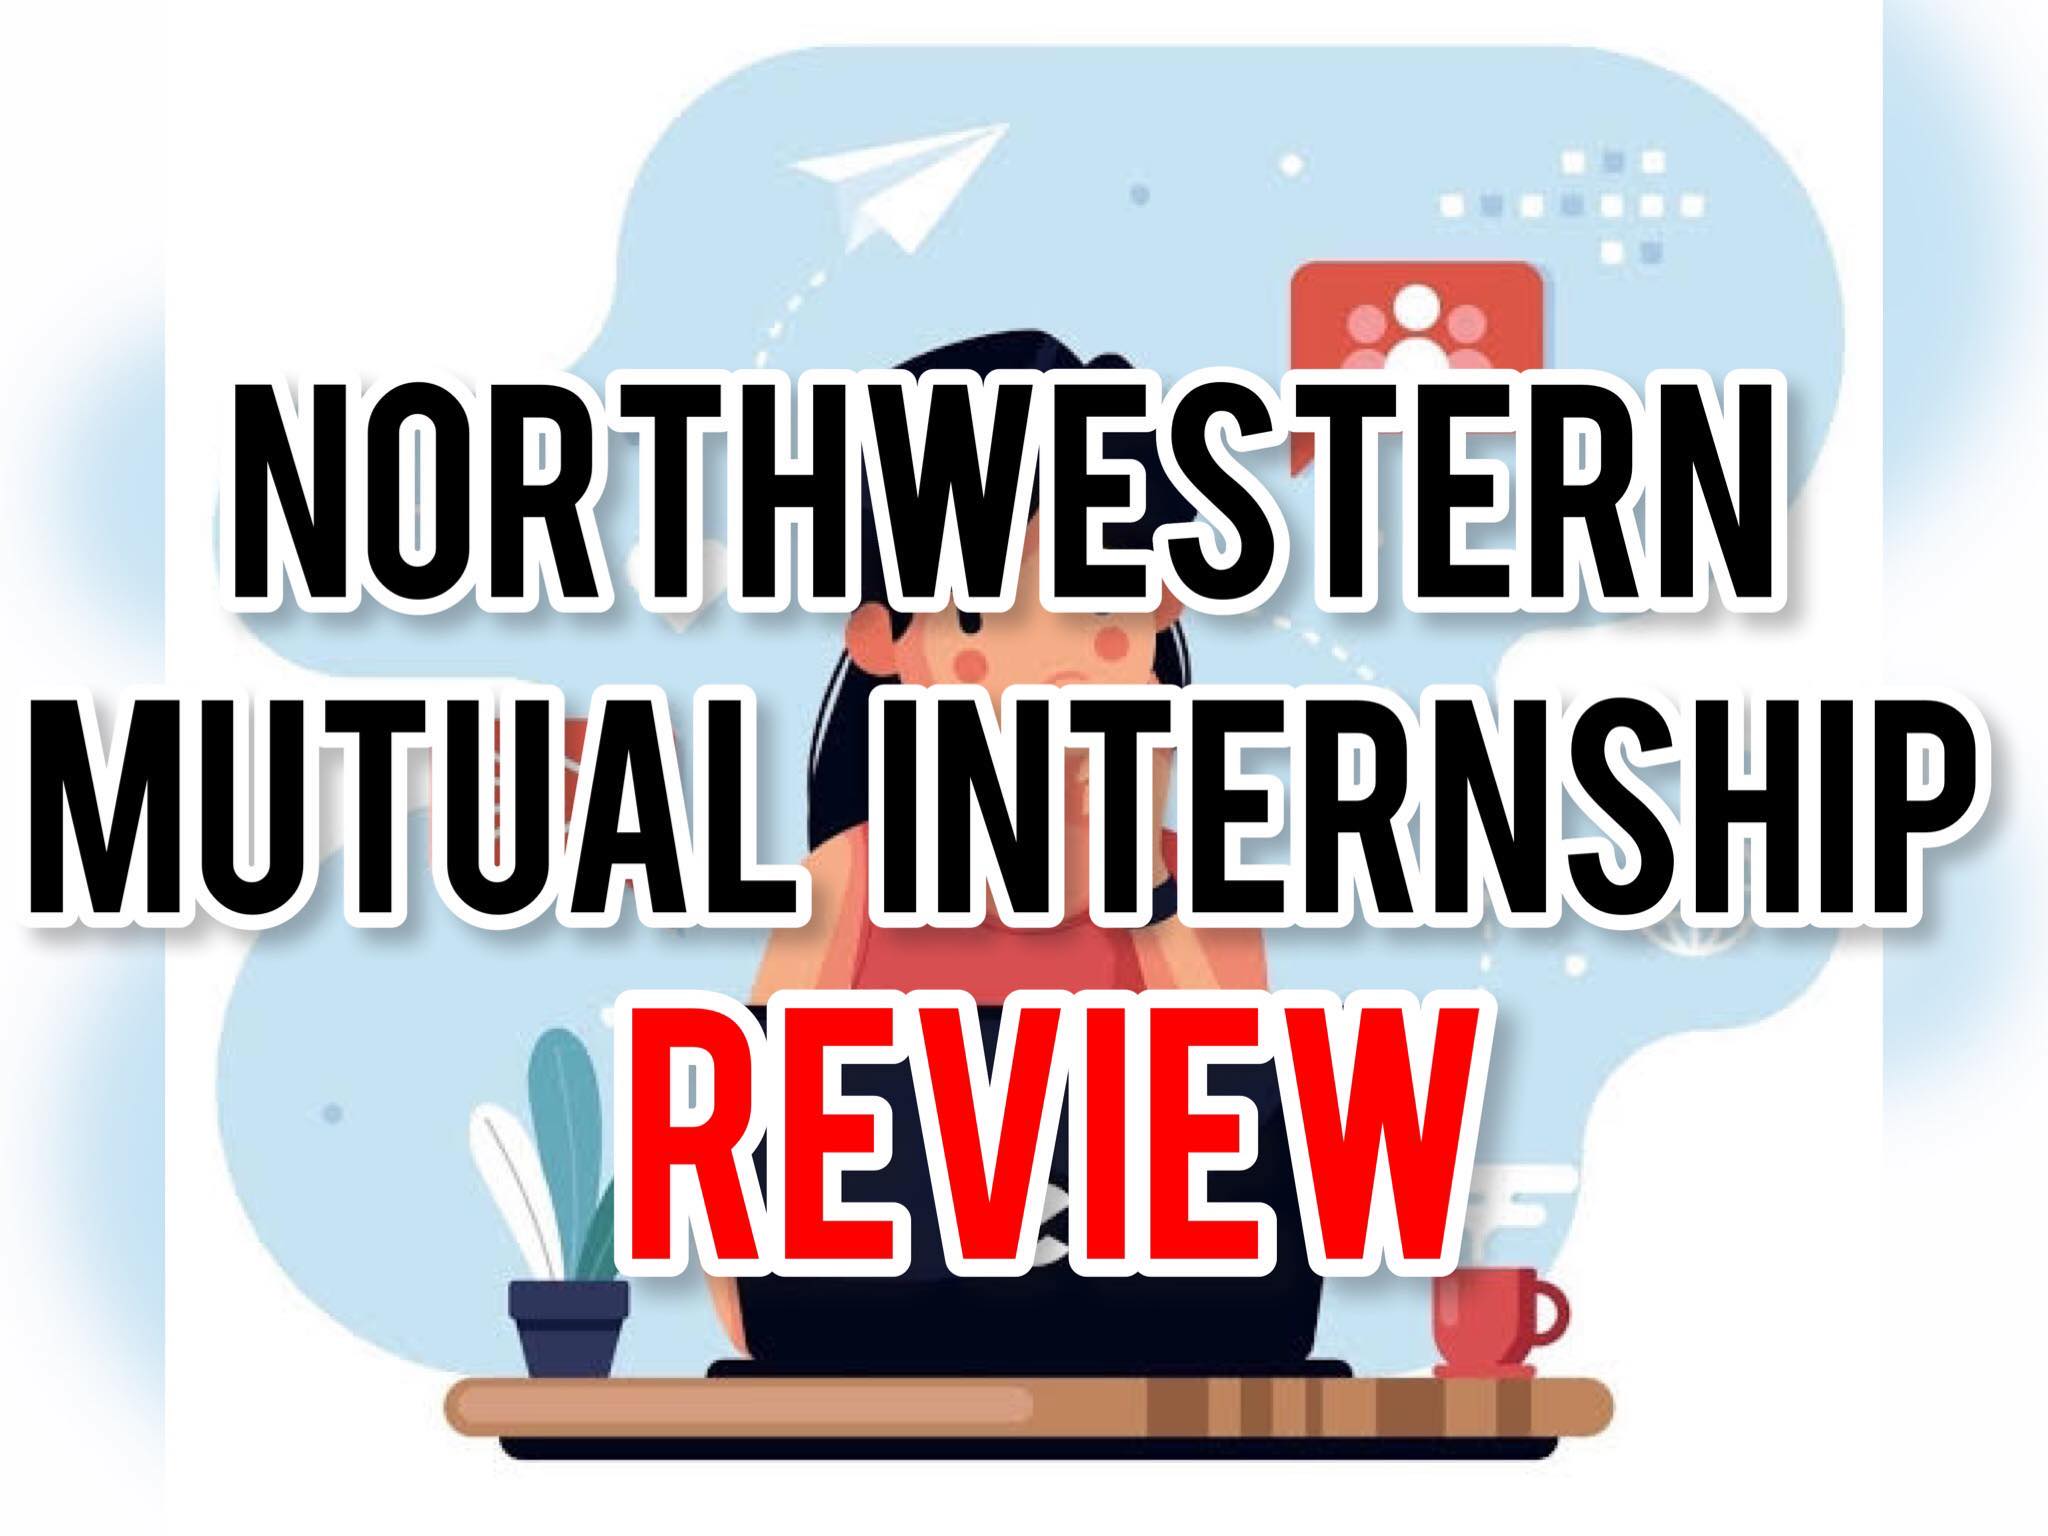 Northwestern Mutual Internship Review